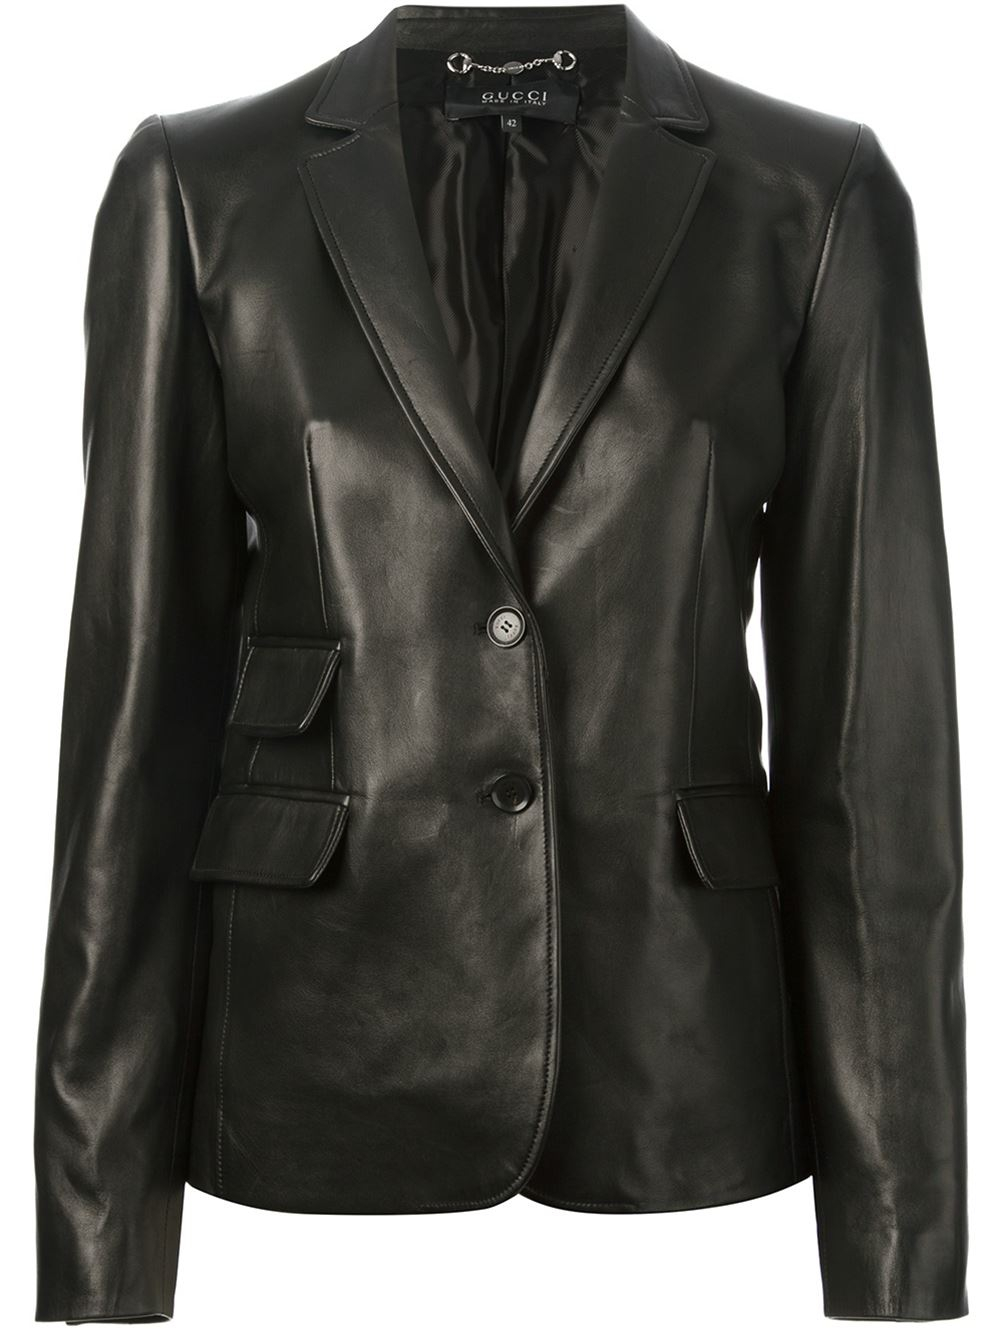 Gucci Leather Blazer Jacket in Black | Lyst